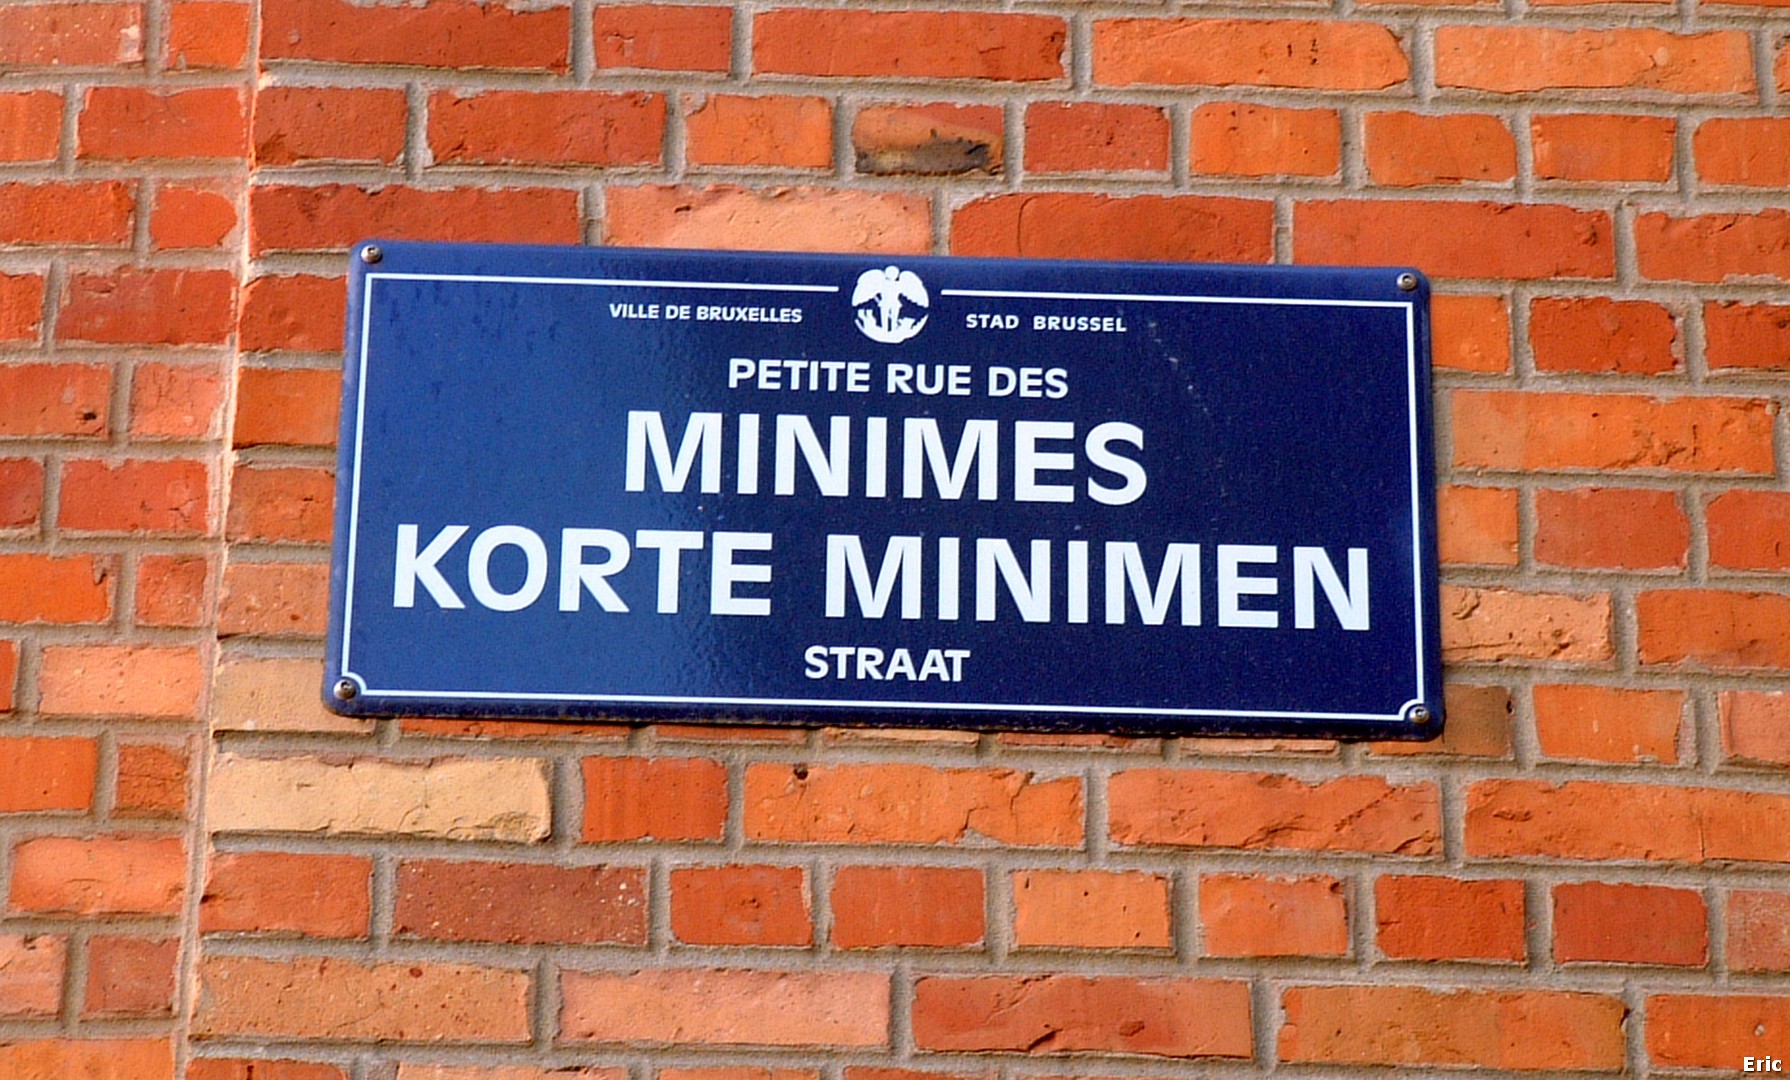  Minimes